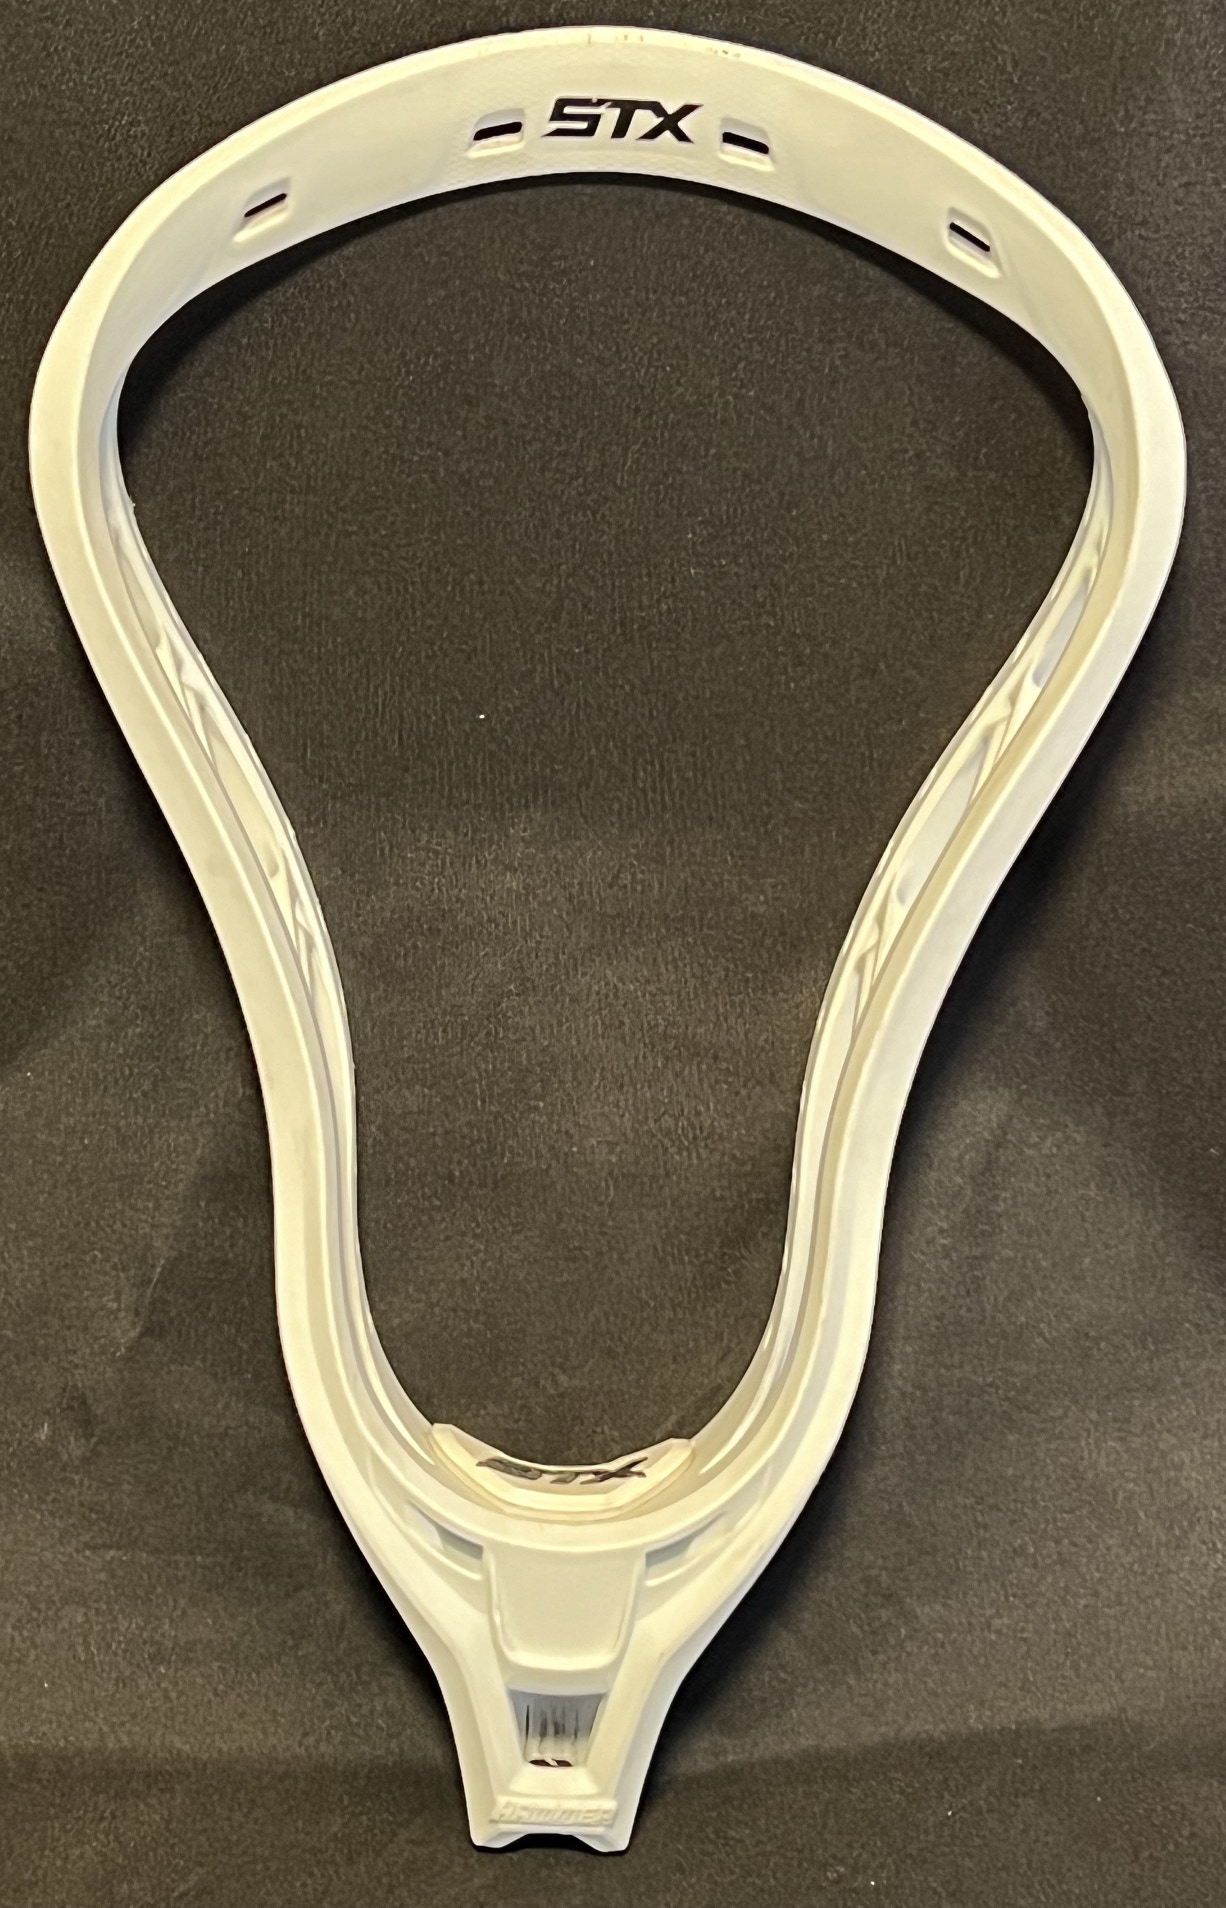 Used STX Unstrung Hammer Lacrosse Head